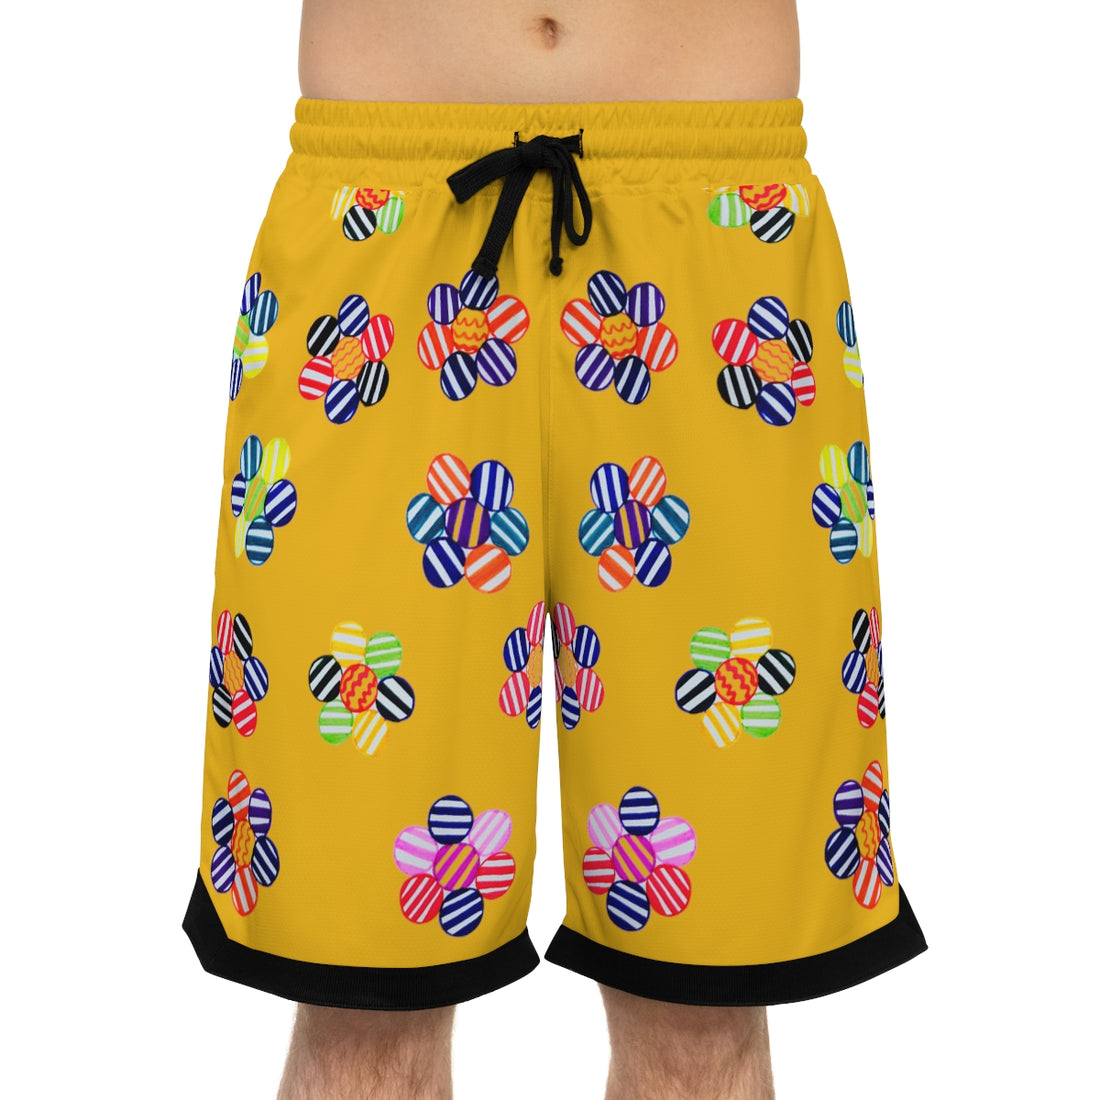 Yellow geometric floral print basketball shorts for men